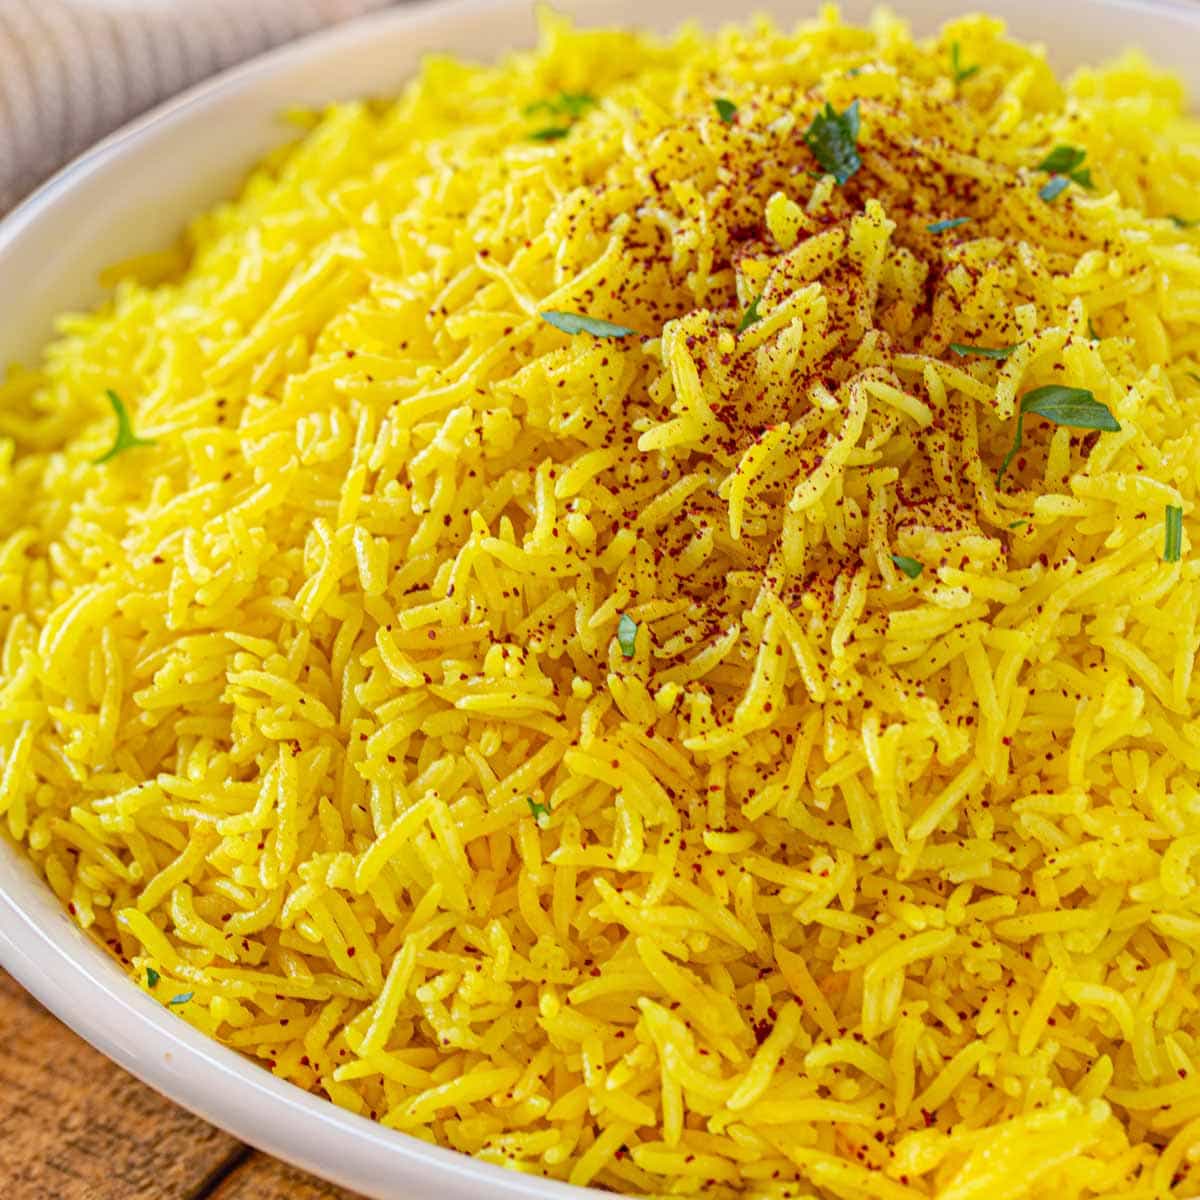 How to make saffron rice